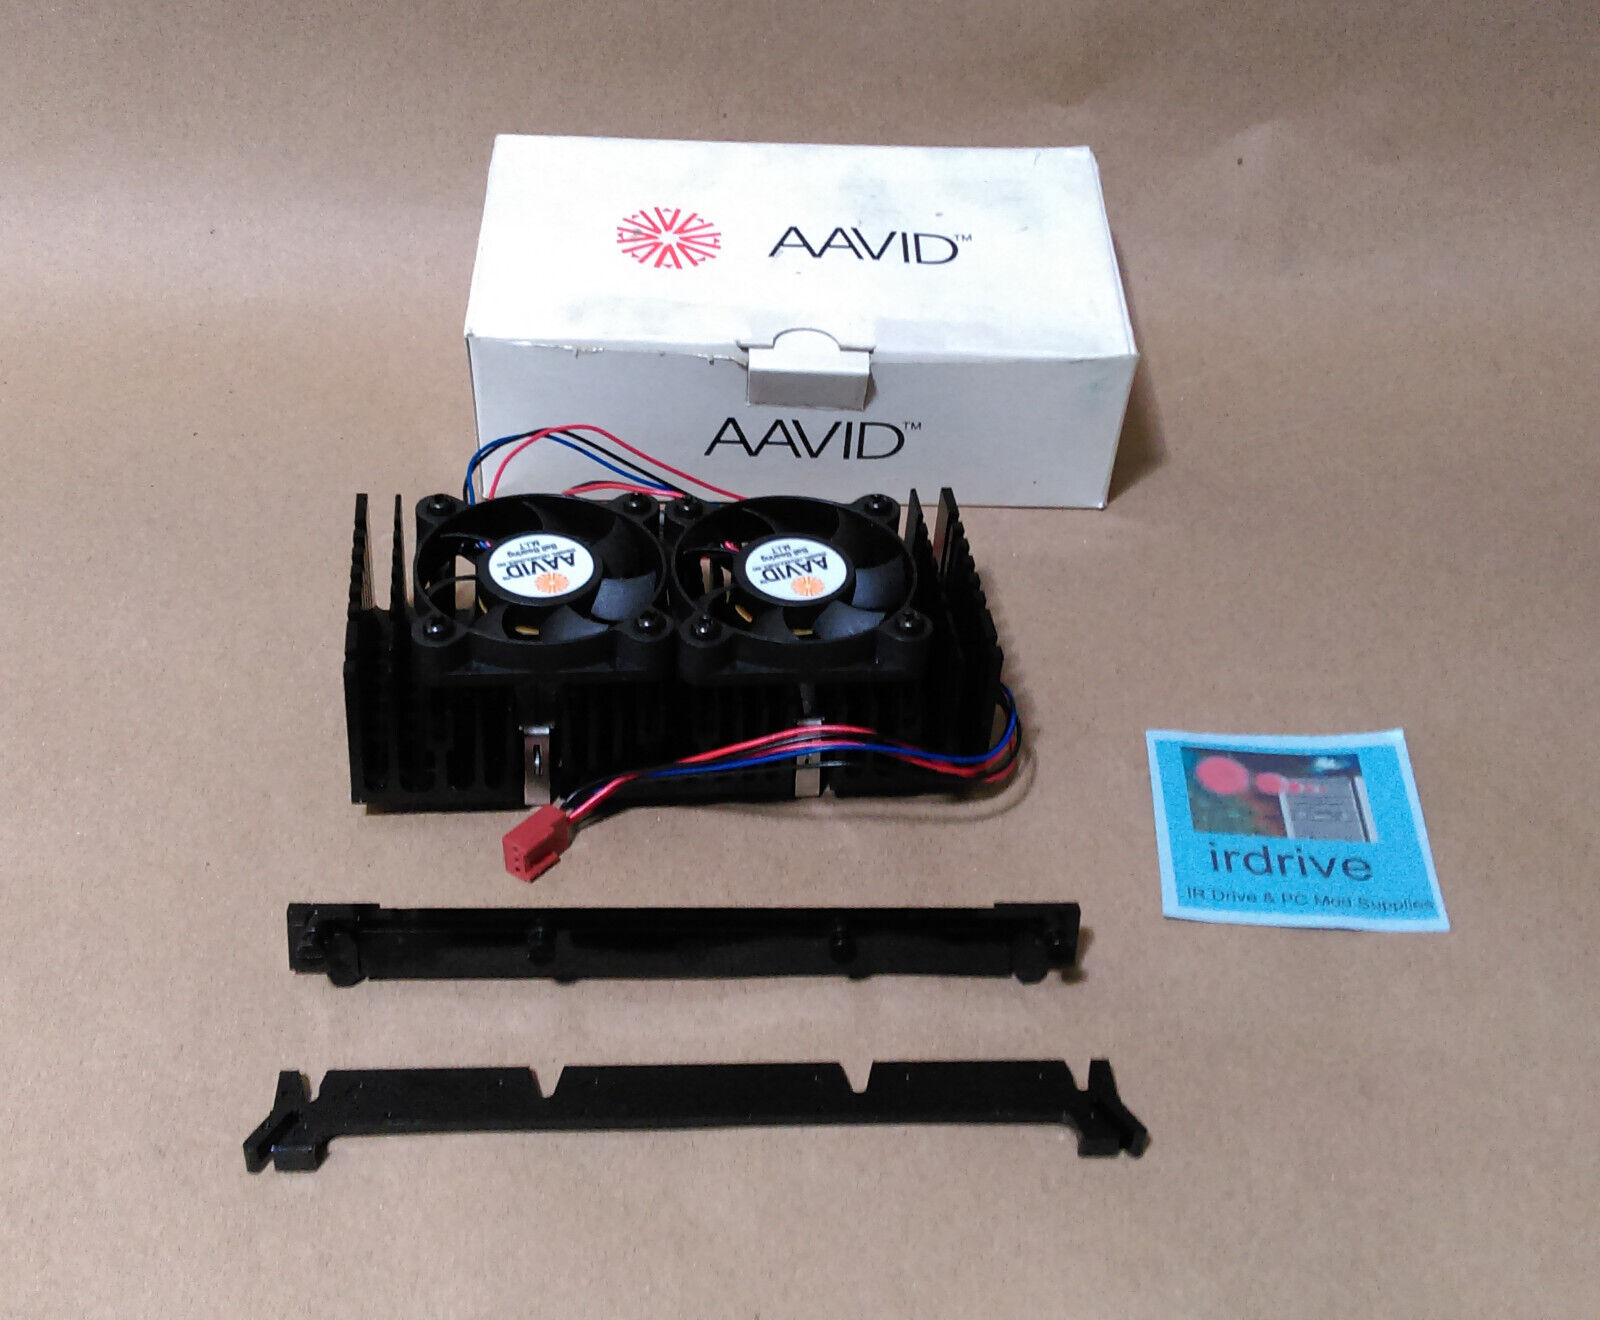 AAVID DUAL Fan CPU Cooler for Intel Pentium II Slot 1 AMD Athlon, Ball Bearing 